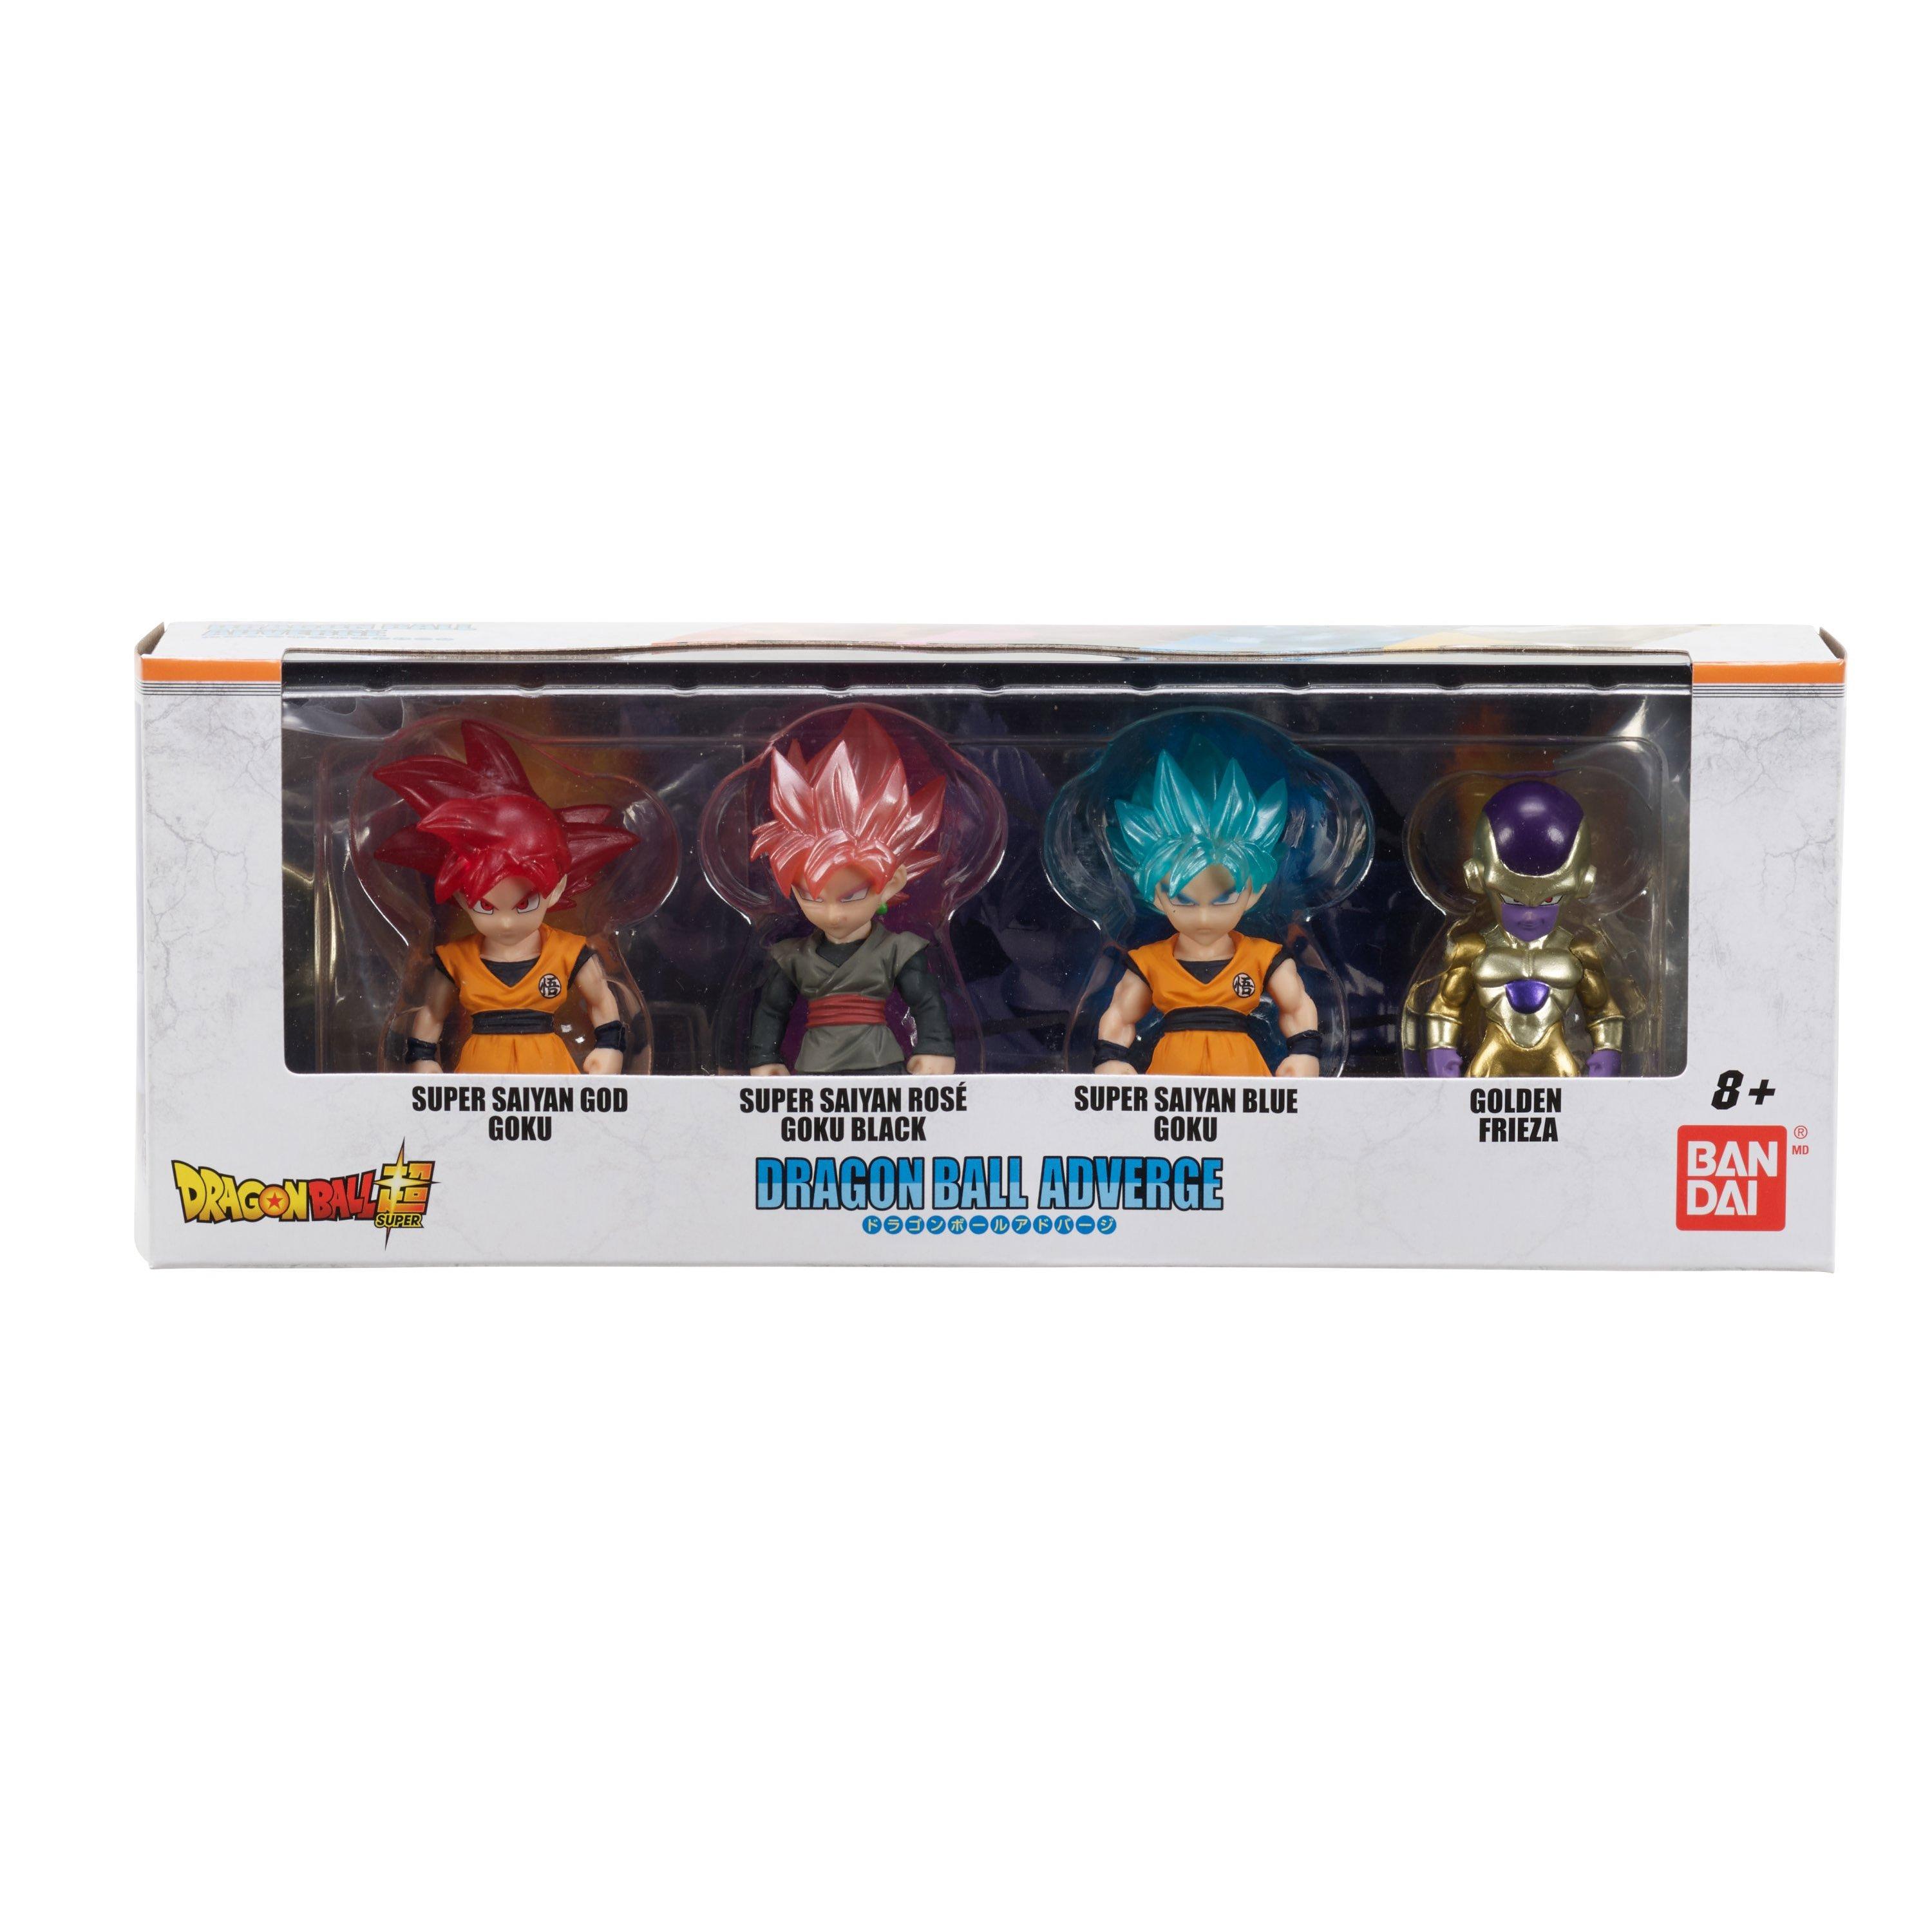 Dragon Ball Super Goku God Goku Rose Goku Blue And Golden Freiza Adverge Figure Box Set Set 1 Gamestop